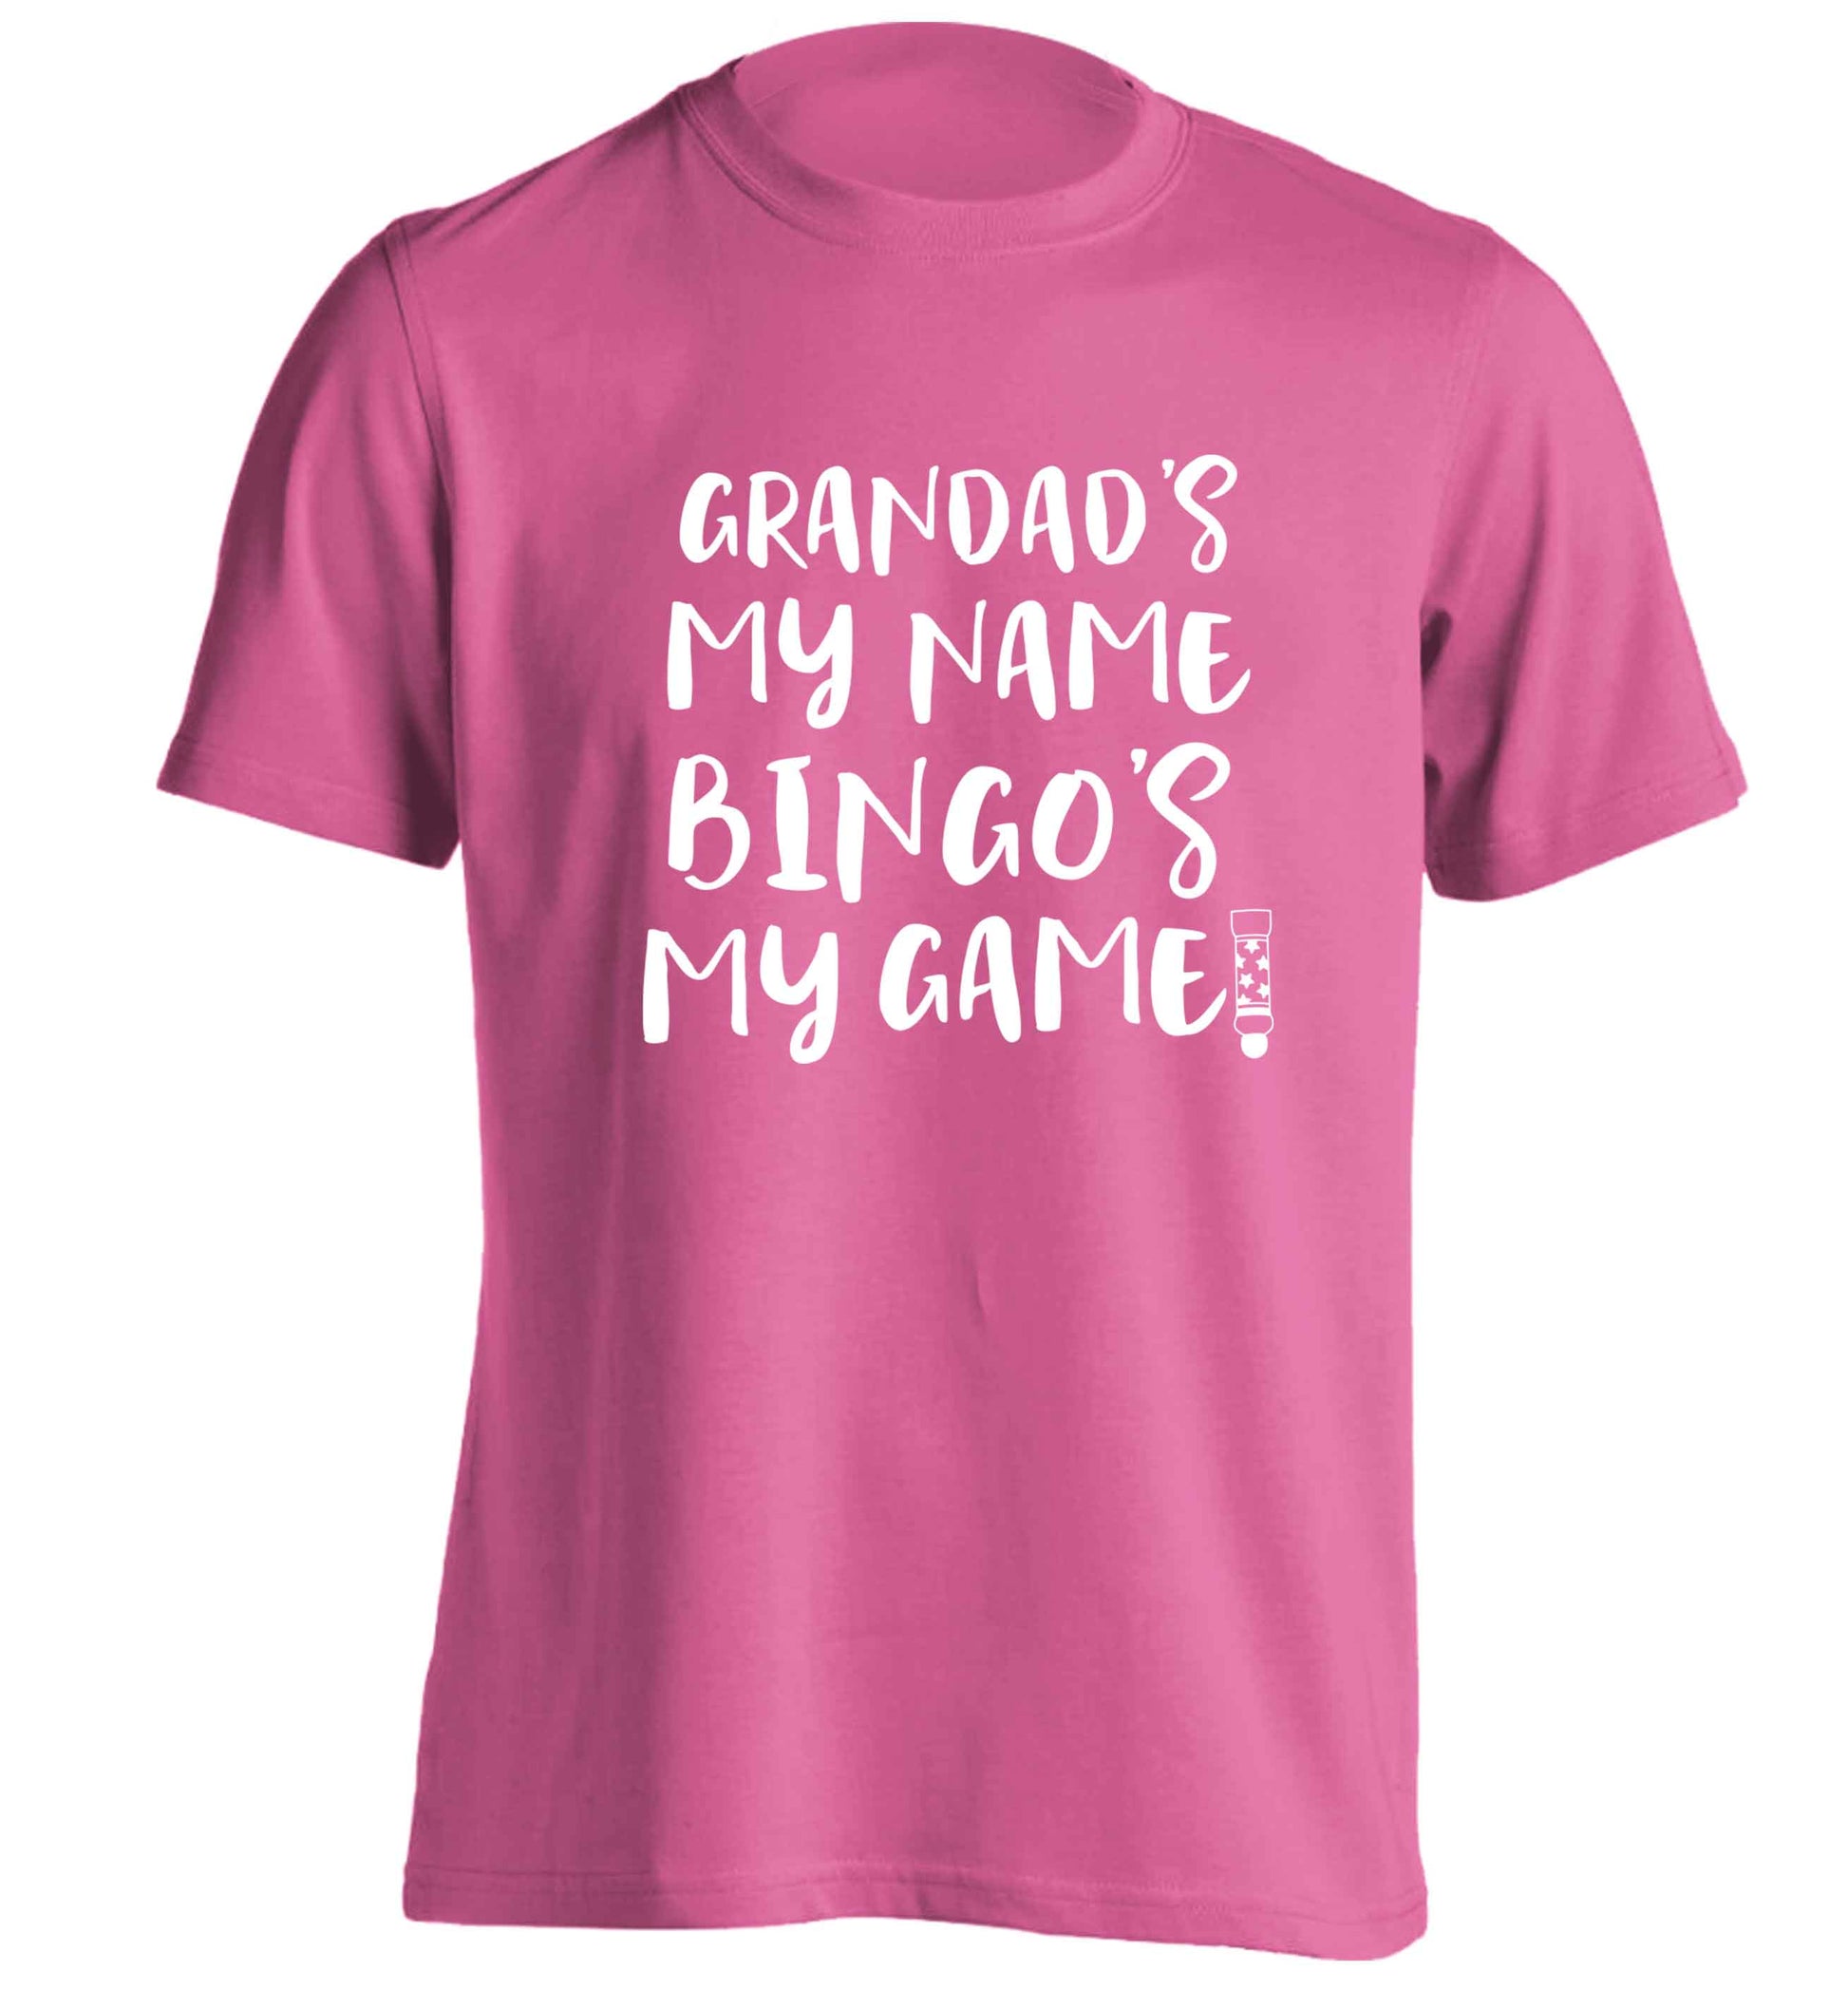 Grandad's my name bingo's my game! adults unisex pink Tshirt 2XL